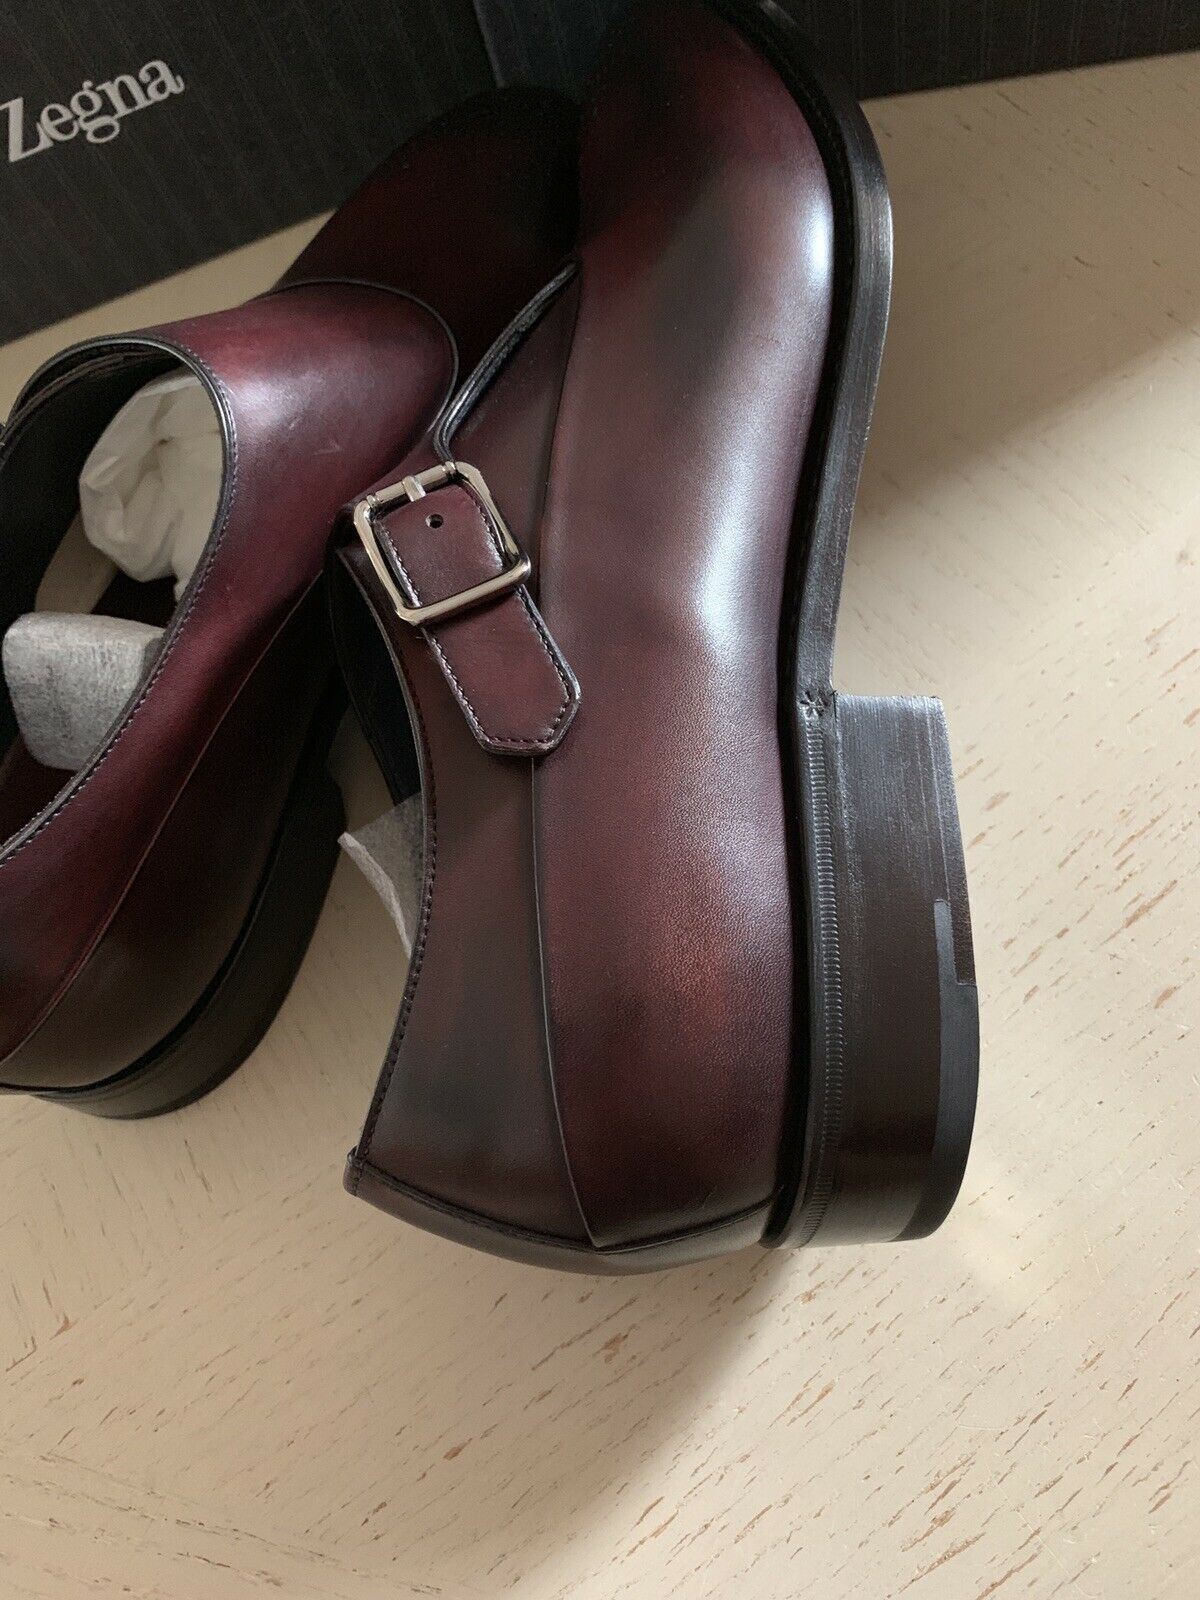 New $1350 Ermenegildo Zegna Couture Monk Brogues Leather Shoes Burgundy 10.5 US